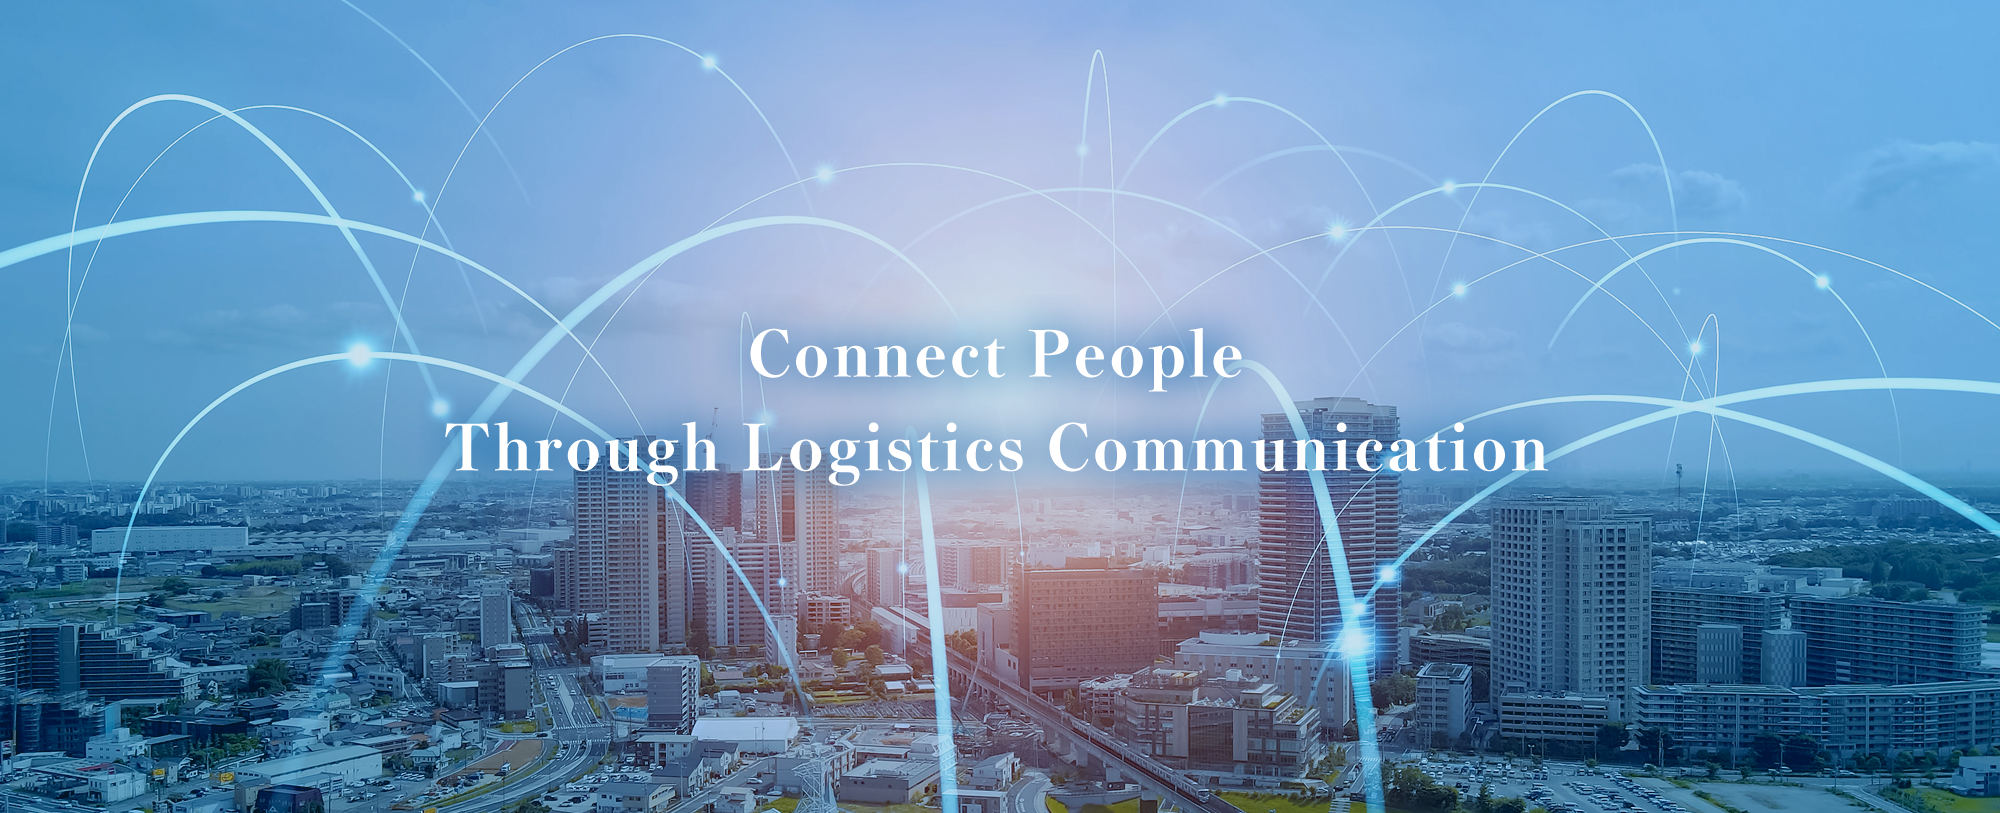 Connect People Through Logistics Communication